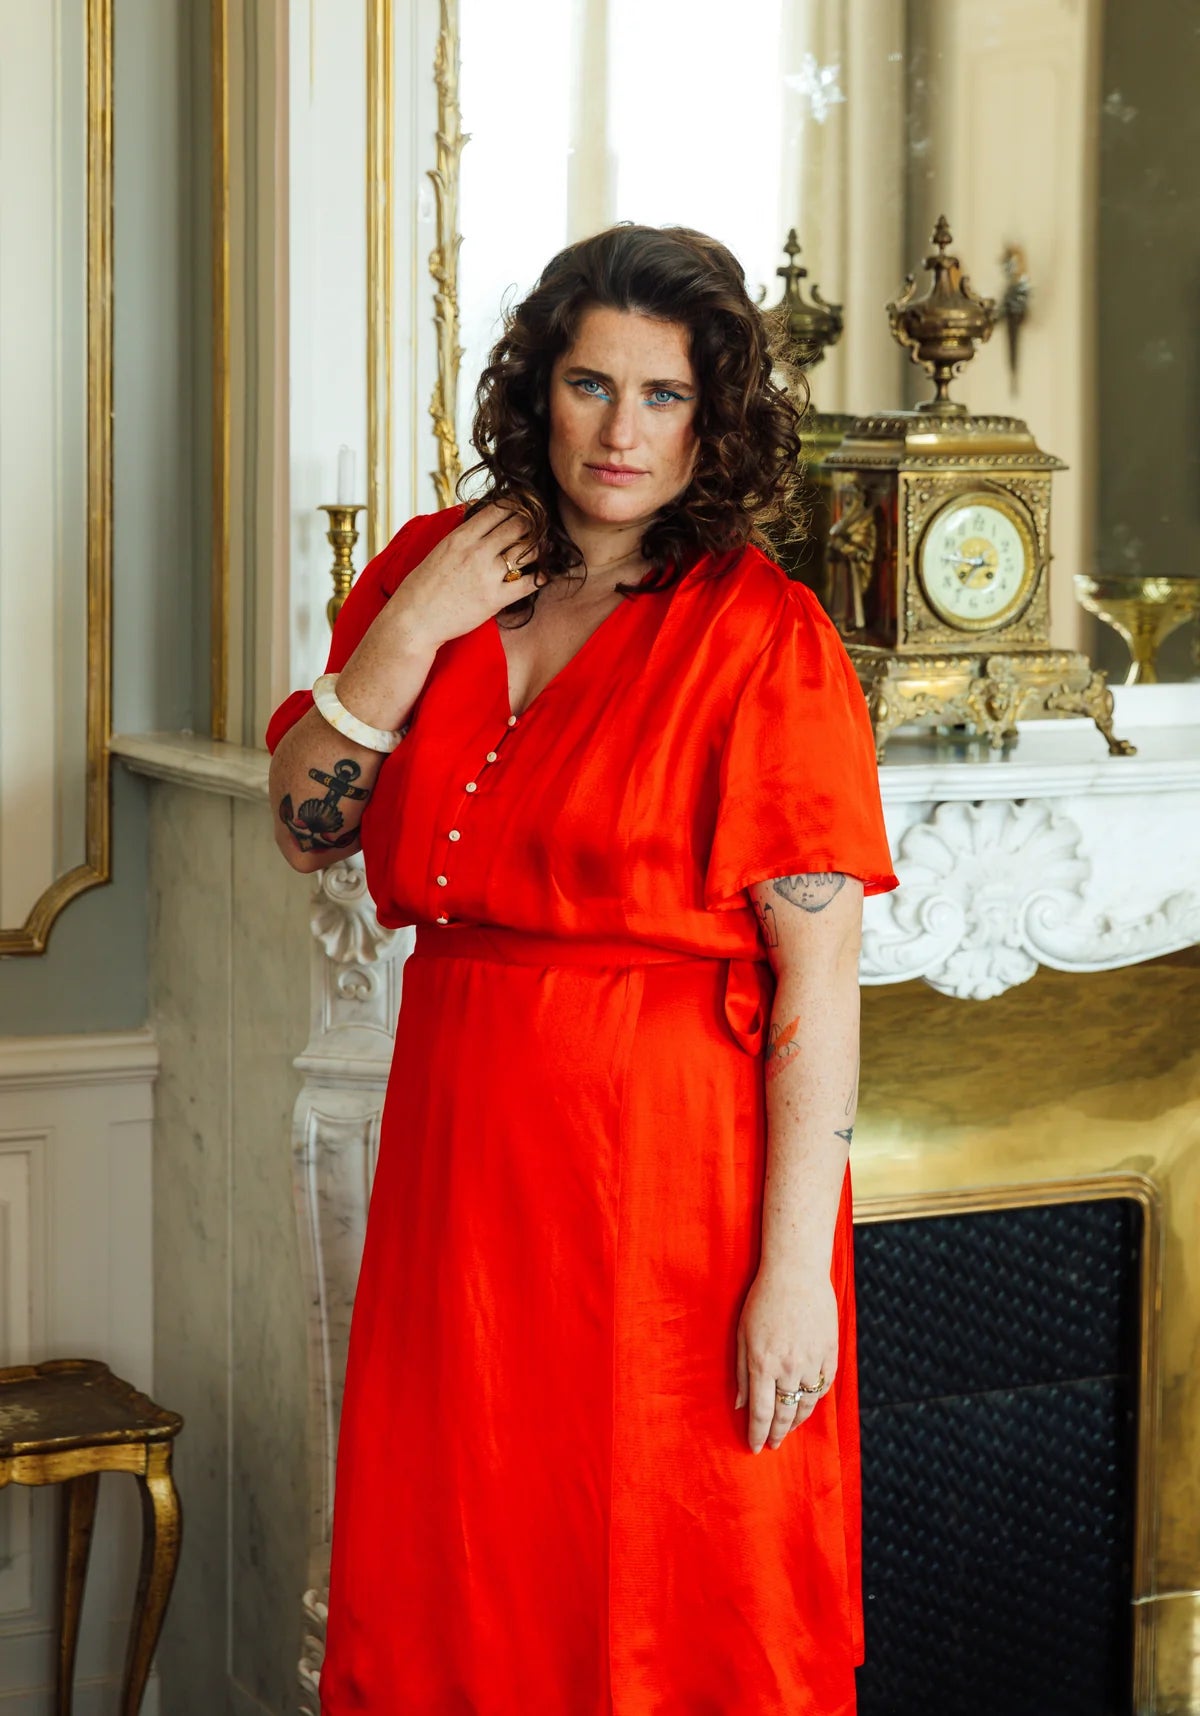 Maison Fauve - Penelope Dress, Blouse and Skirt Sewing Pattern